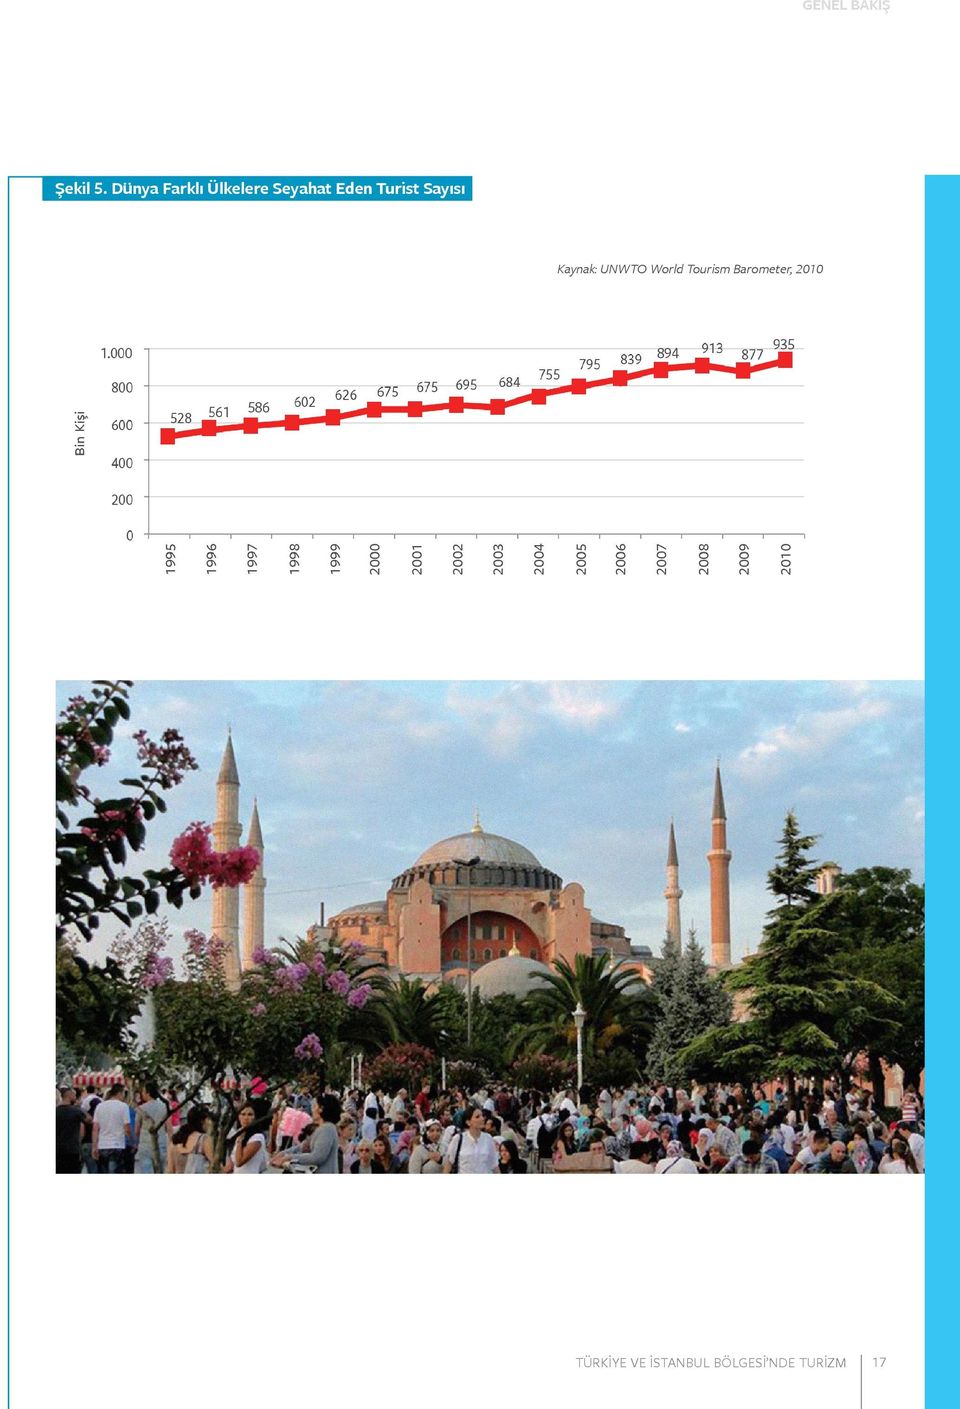 Turist Sayısı Kaynak: UNWTO World